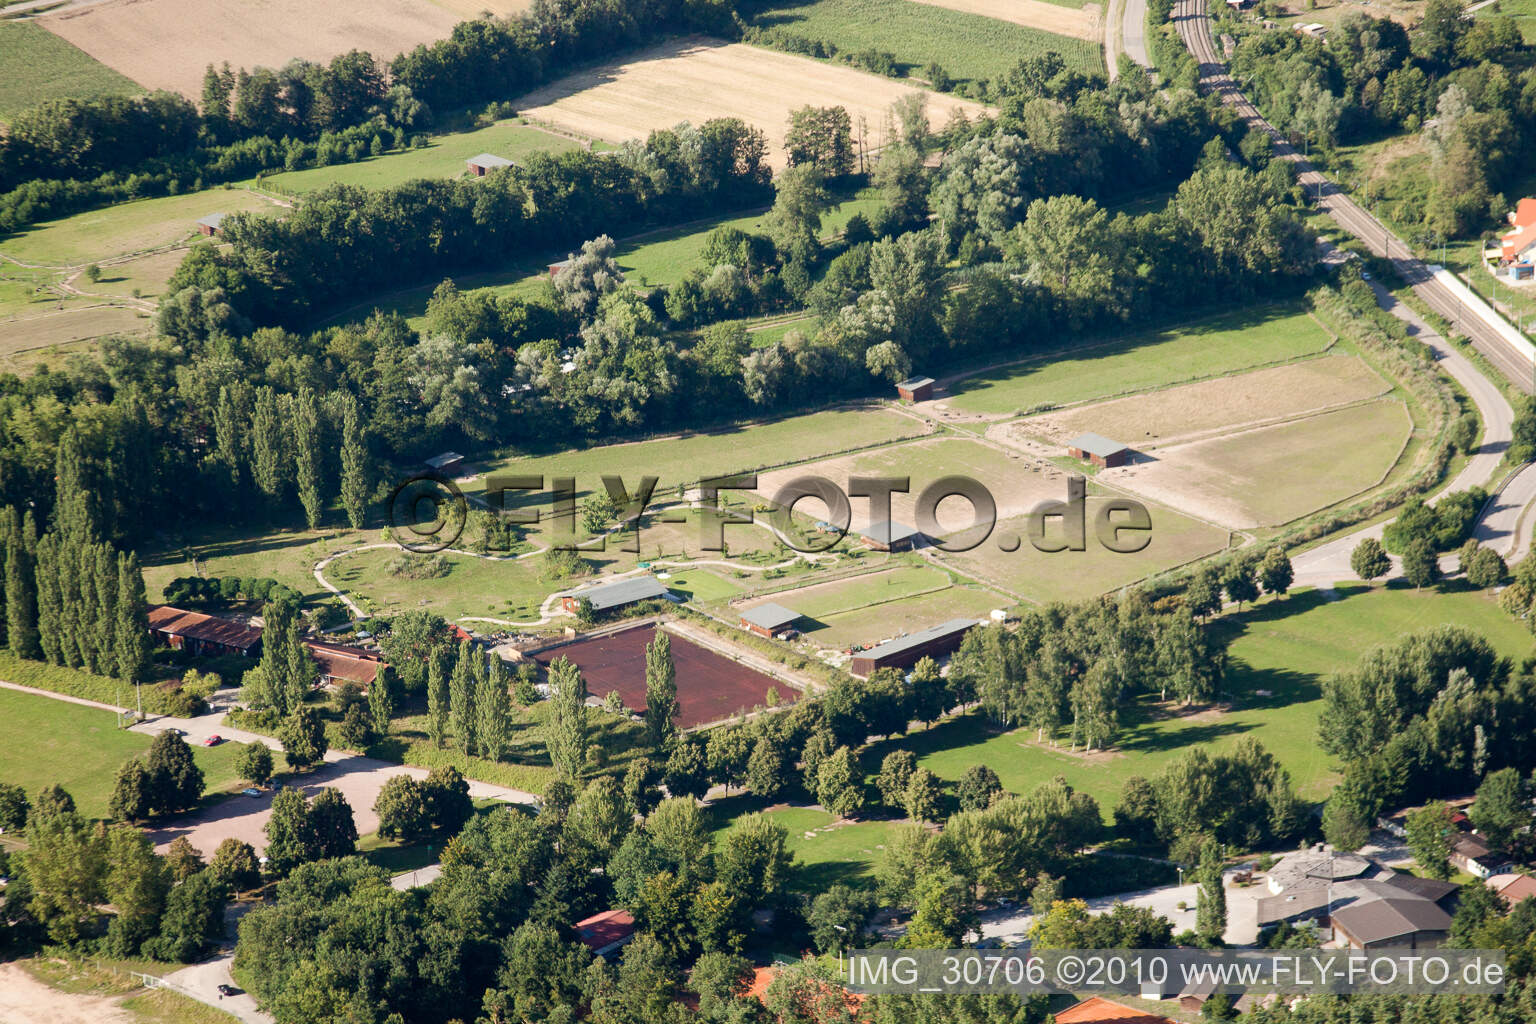 Mhou Ostrich Farm in Rülzheim in the state Rhineland-Palatinate, Germany